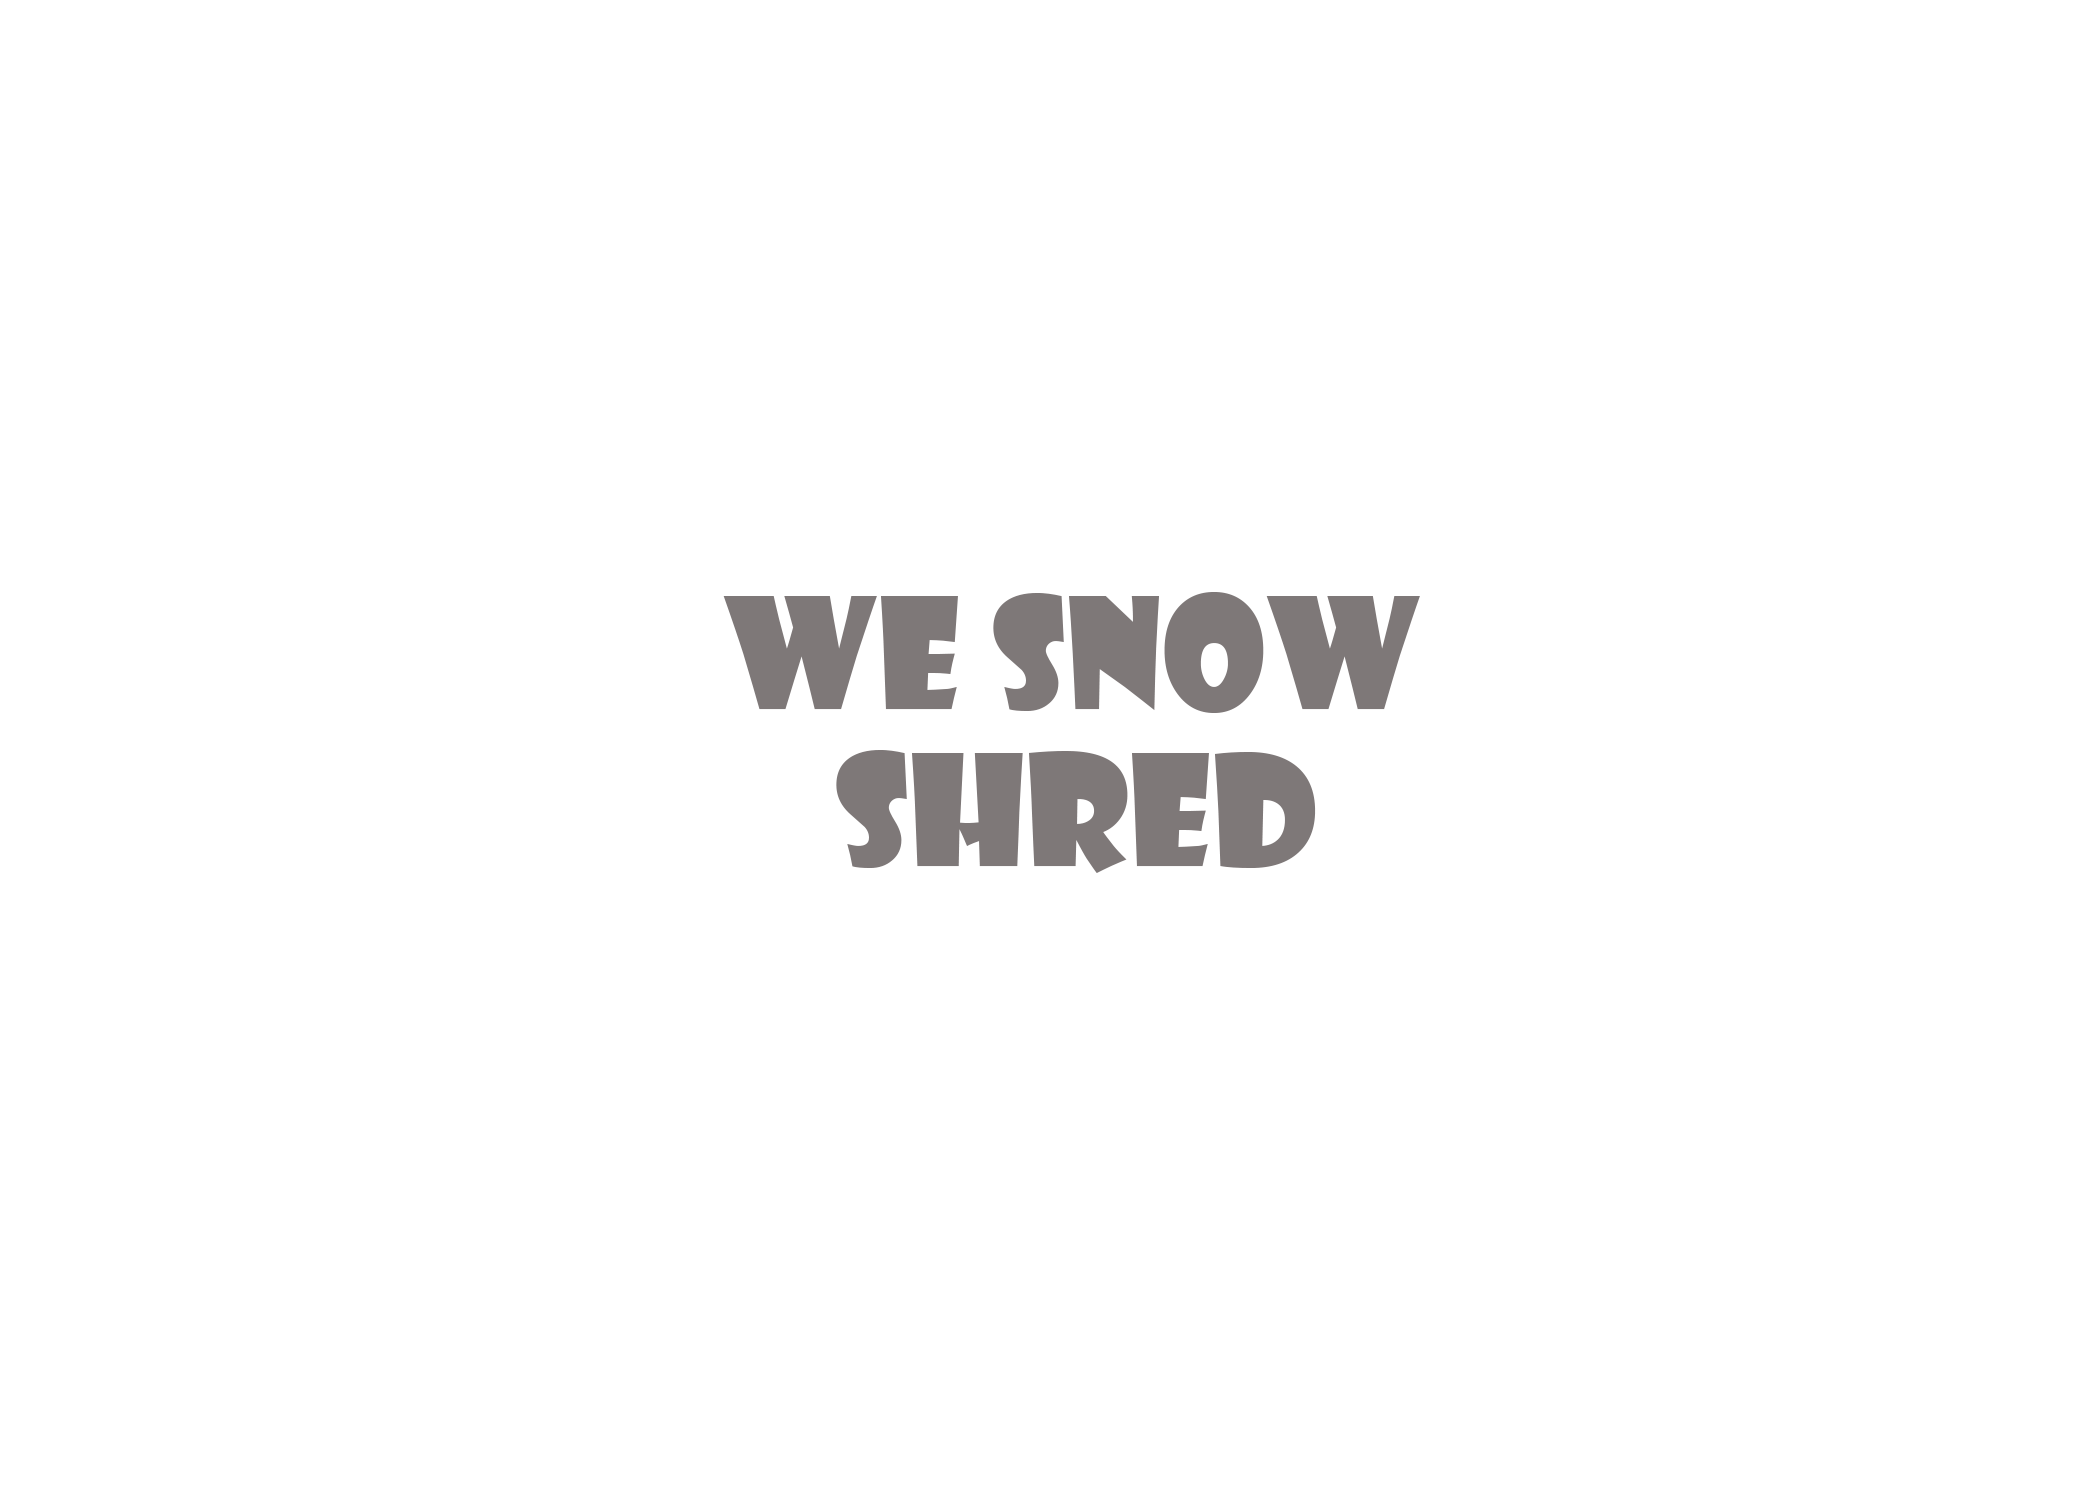 We Snow Shred